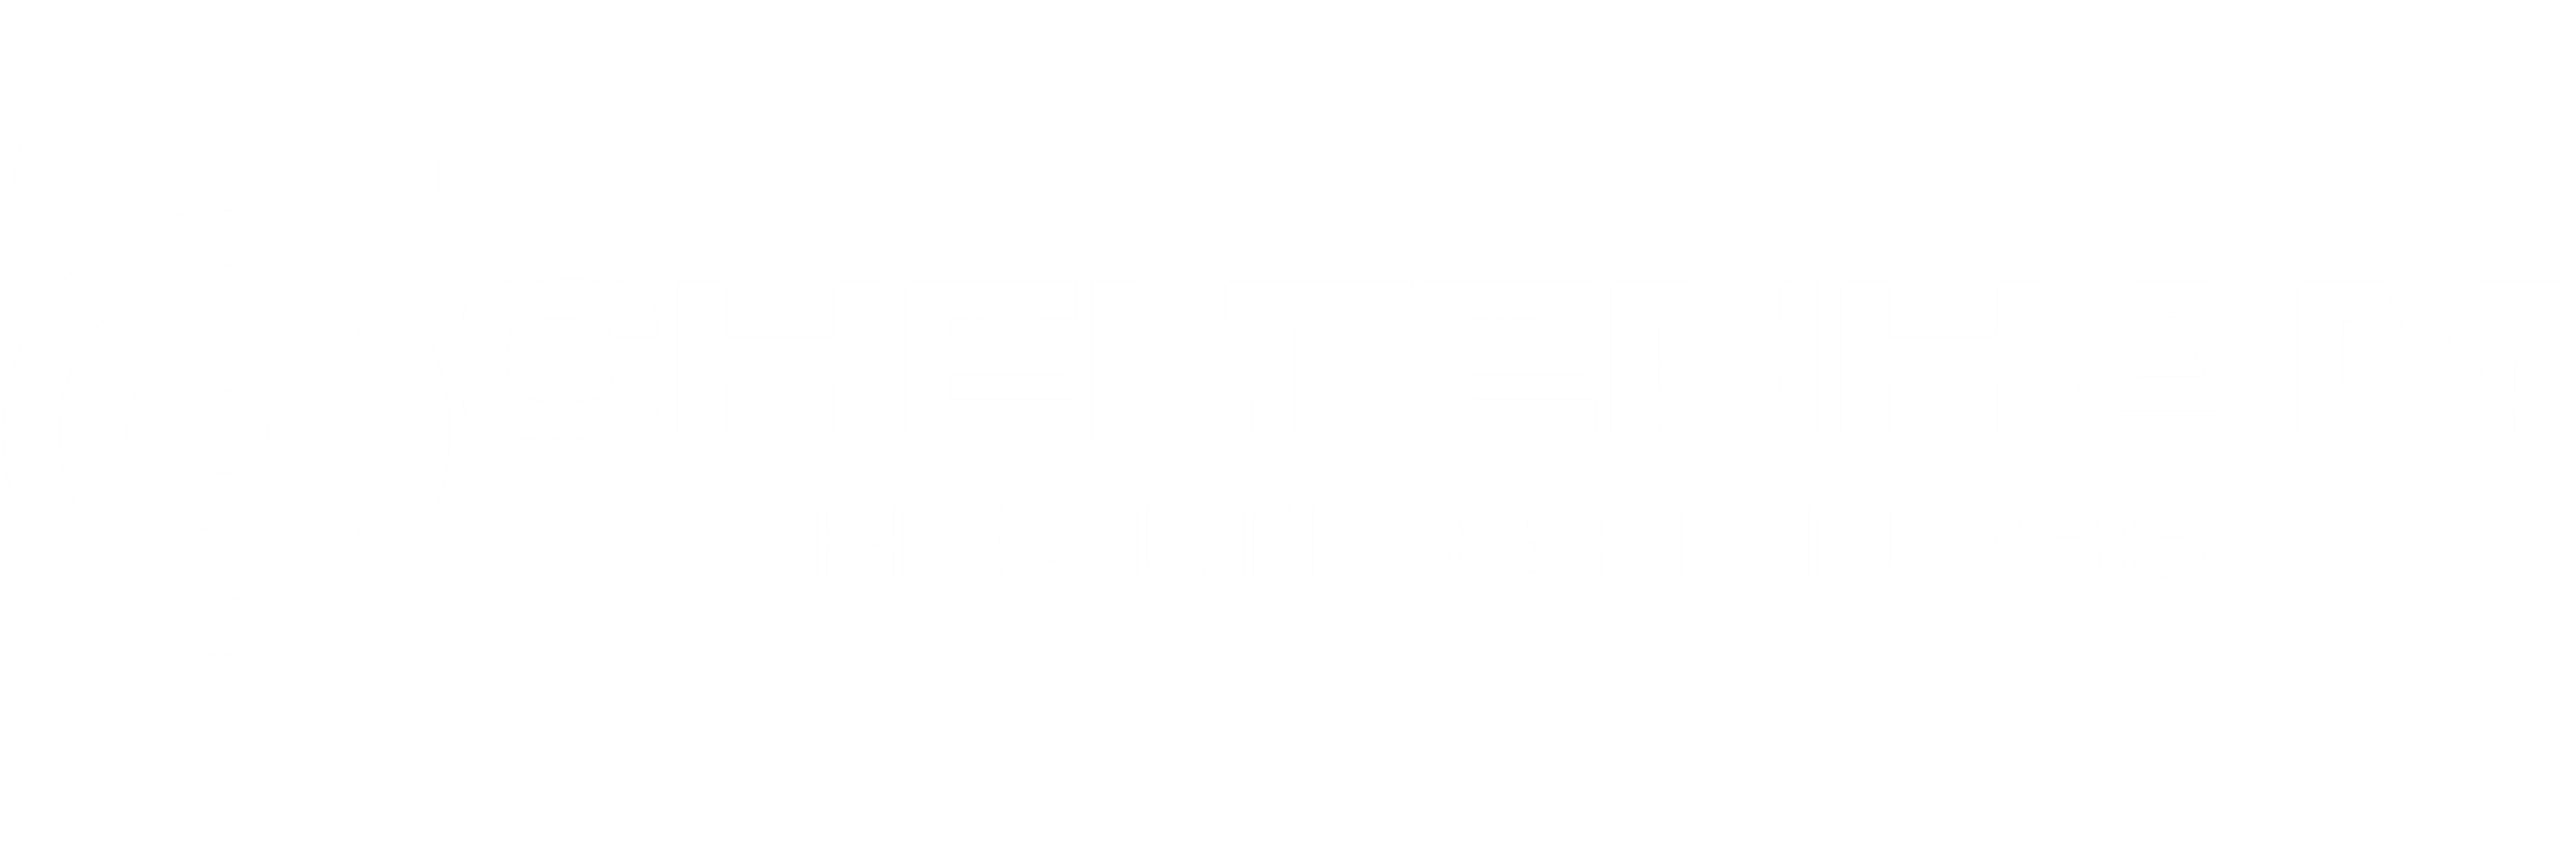 Cheltenham Health & Fitness